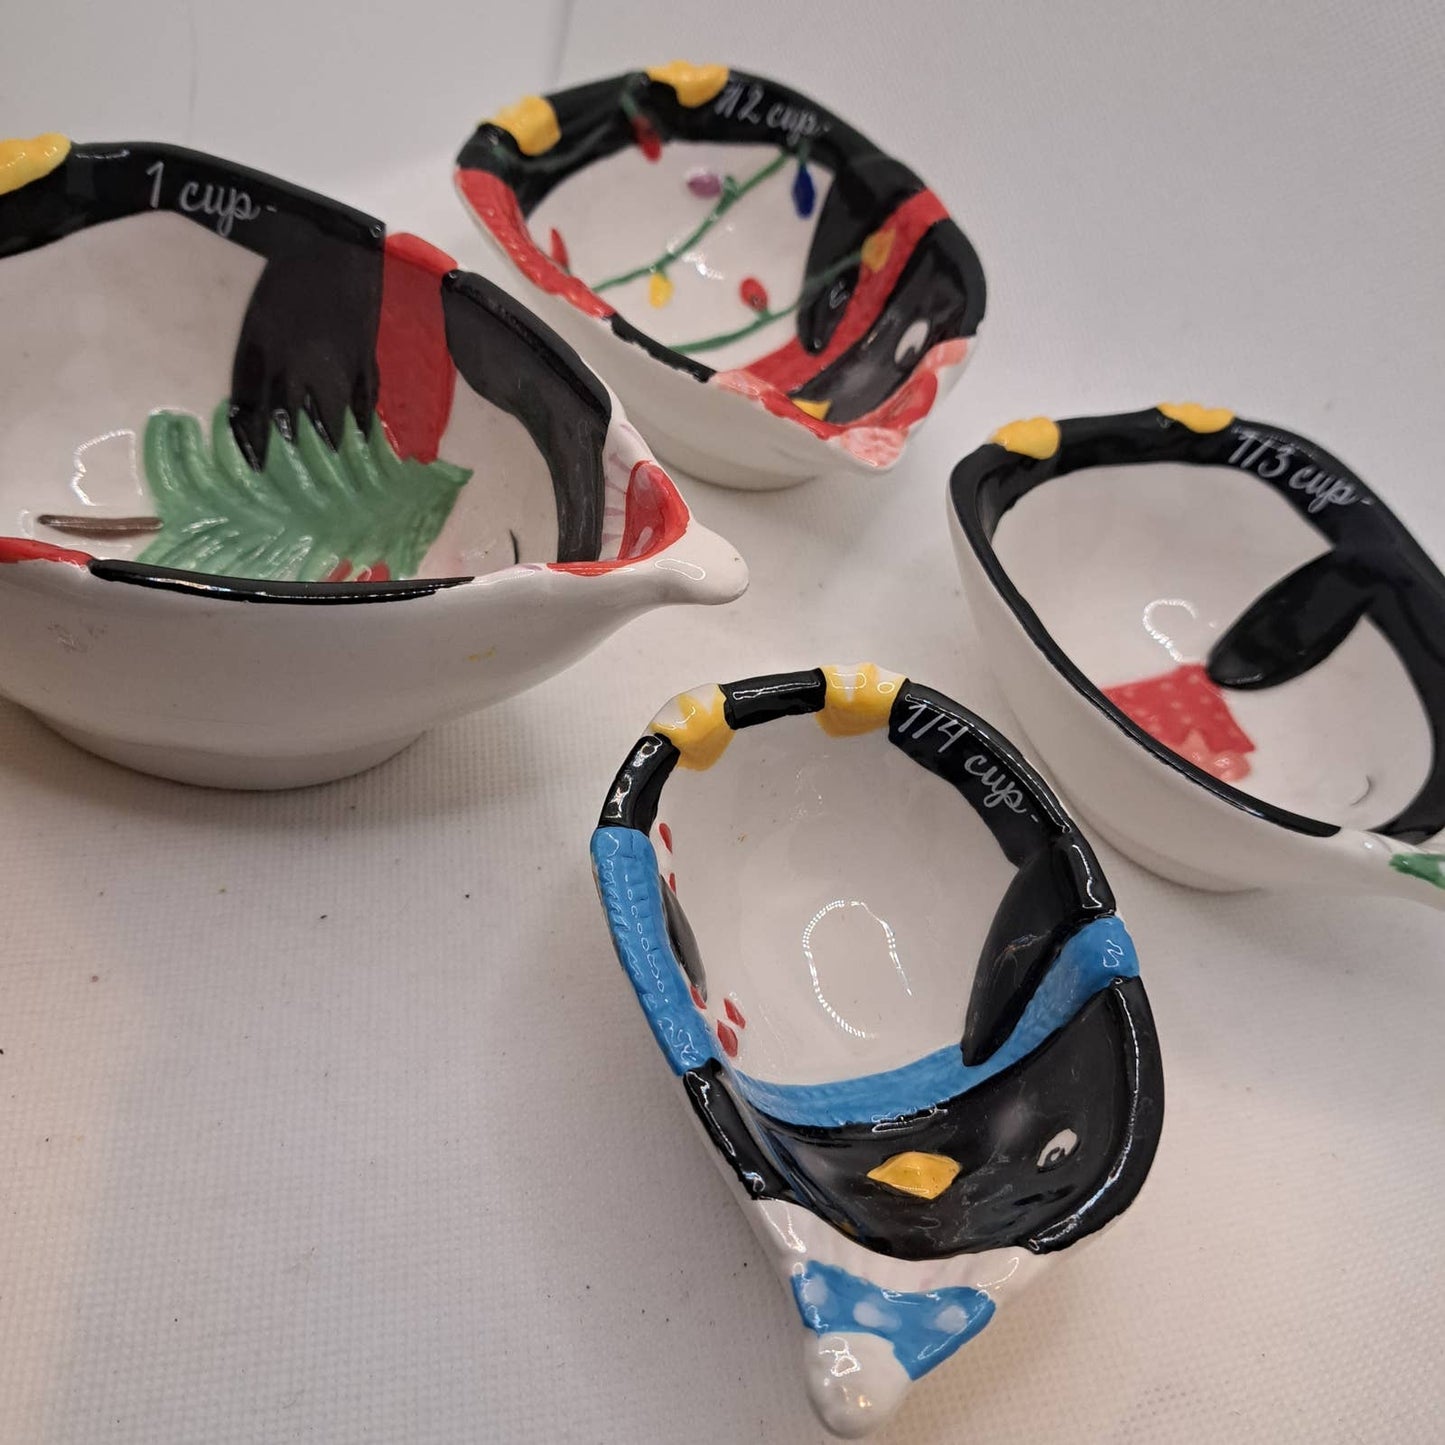 World Market Set Of 4 Ceramic Penguin Measuring Cups Holiday Christmas